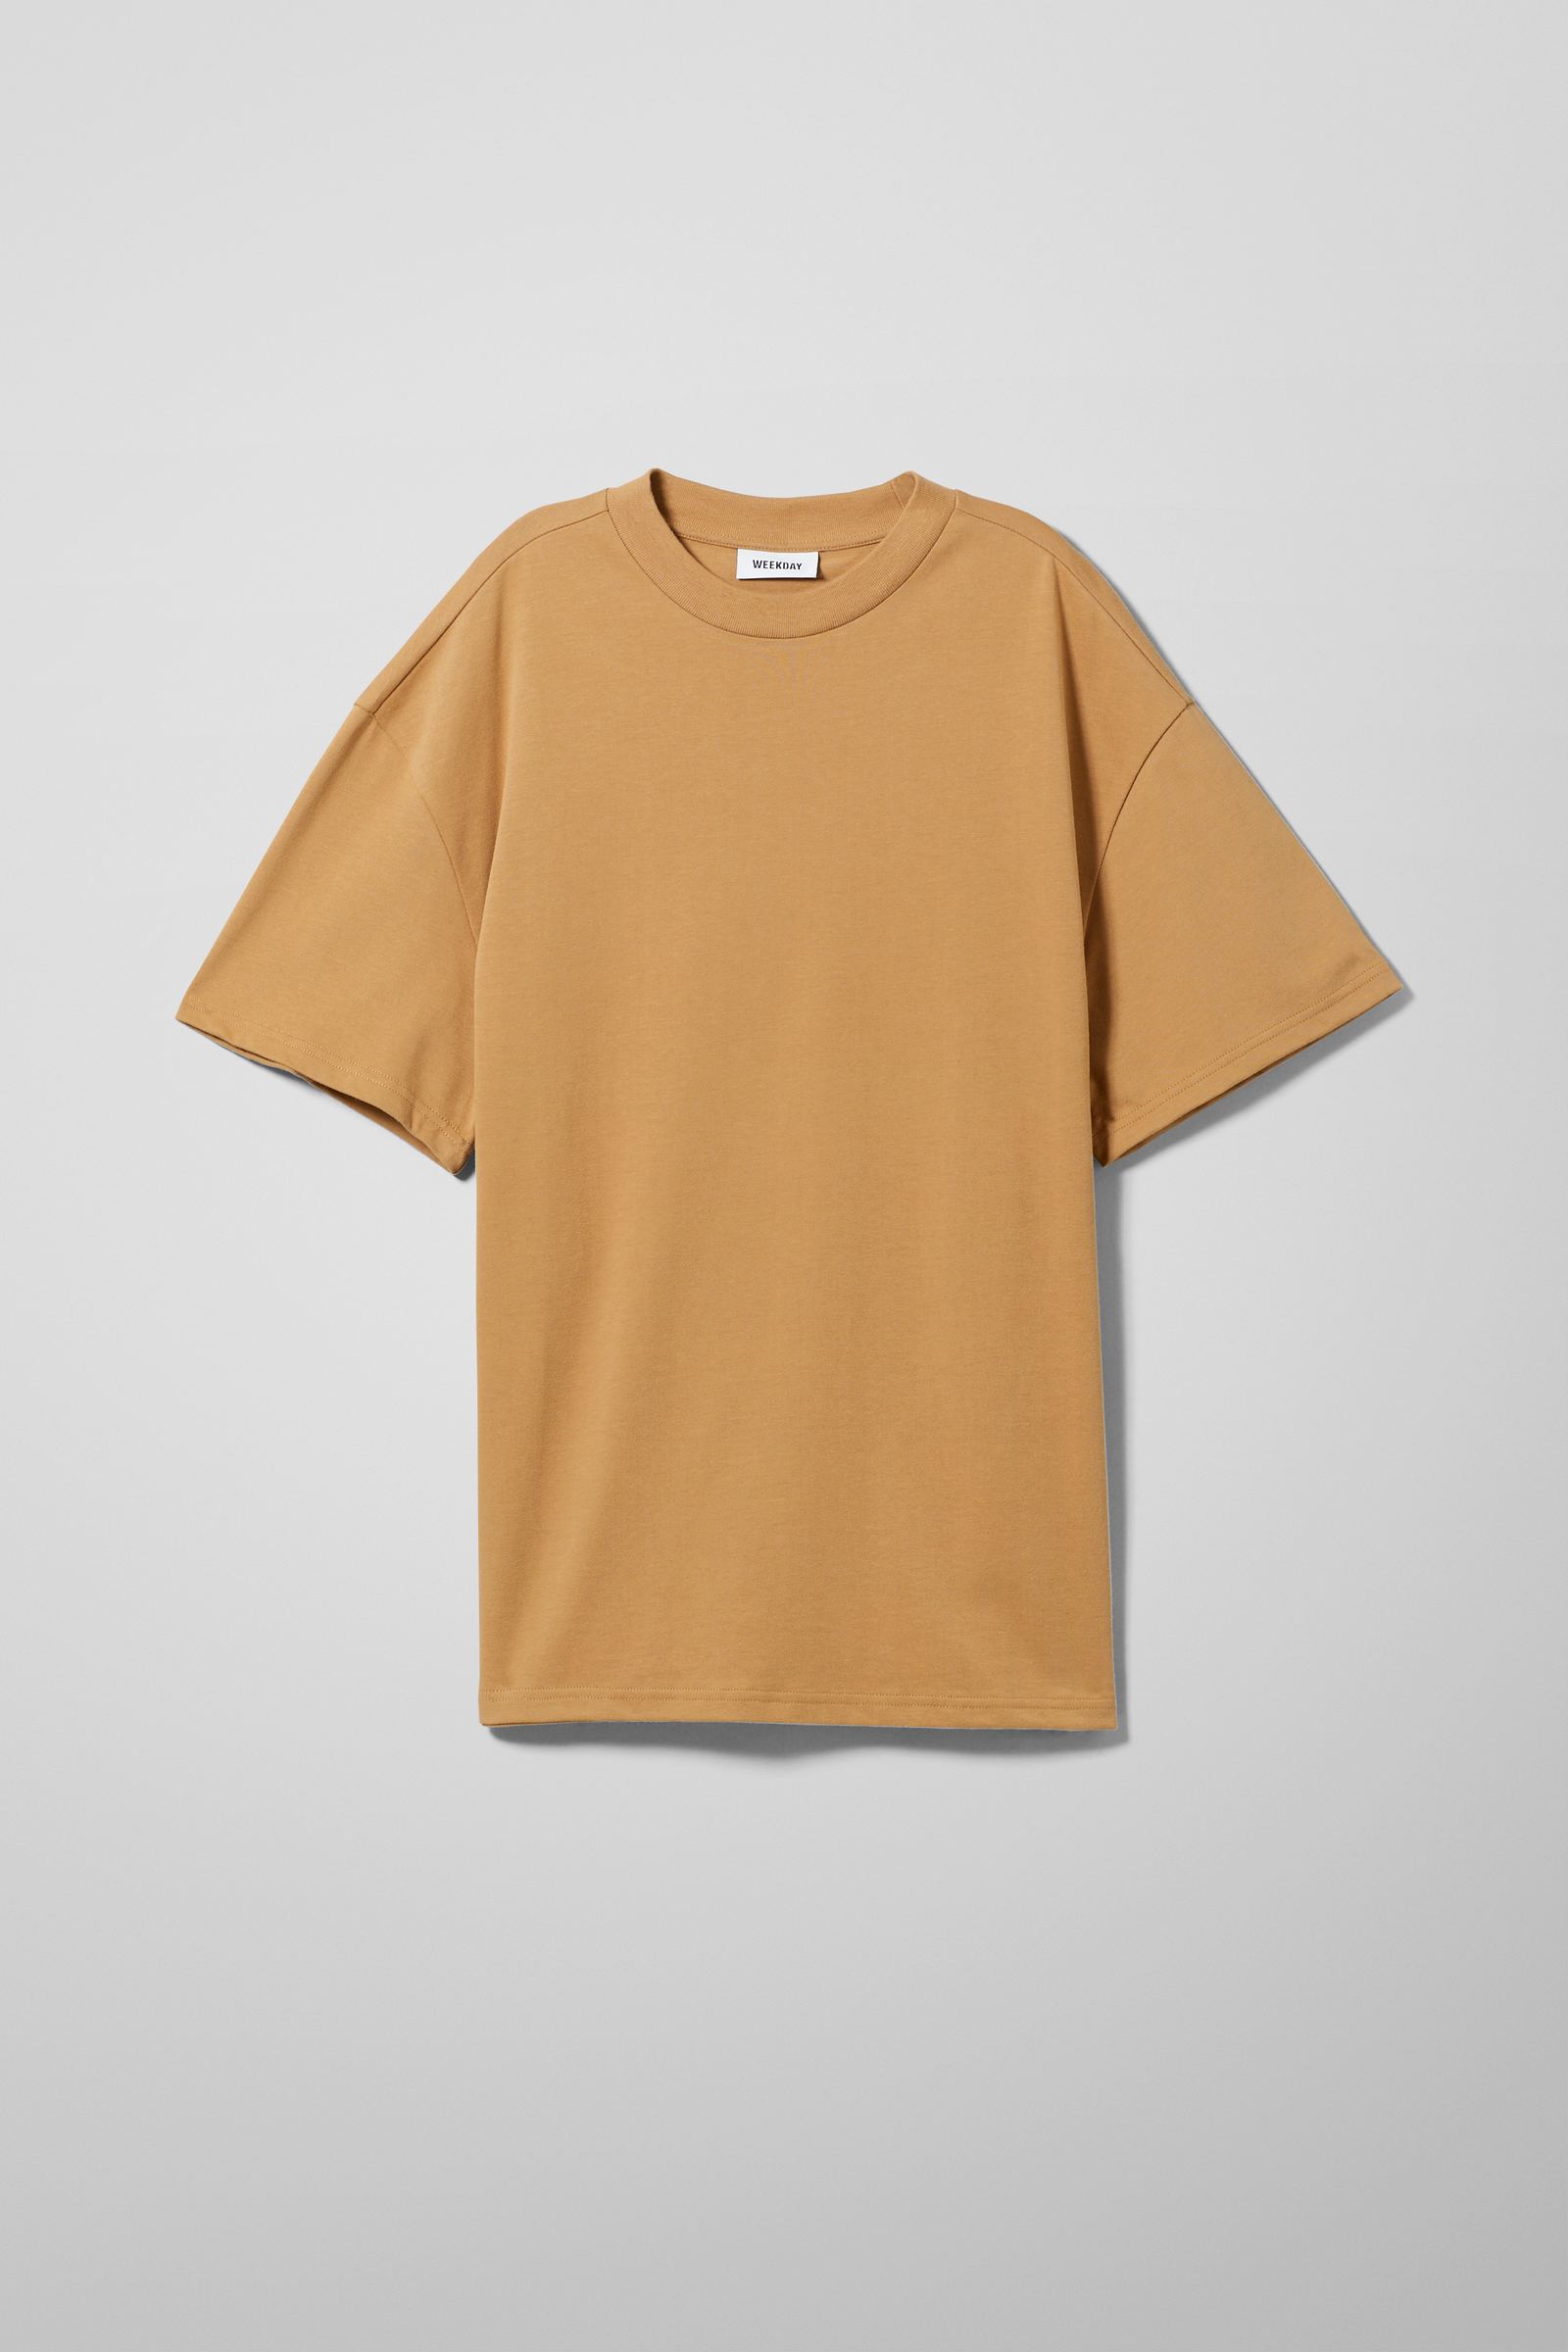 No Boundaries Shirt Men's Oversized Tee - 100% Cotton - Orange - Size: XS